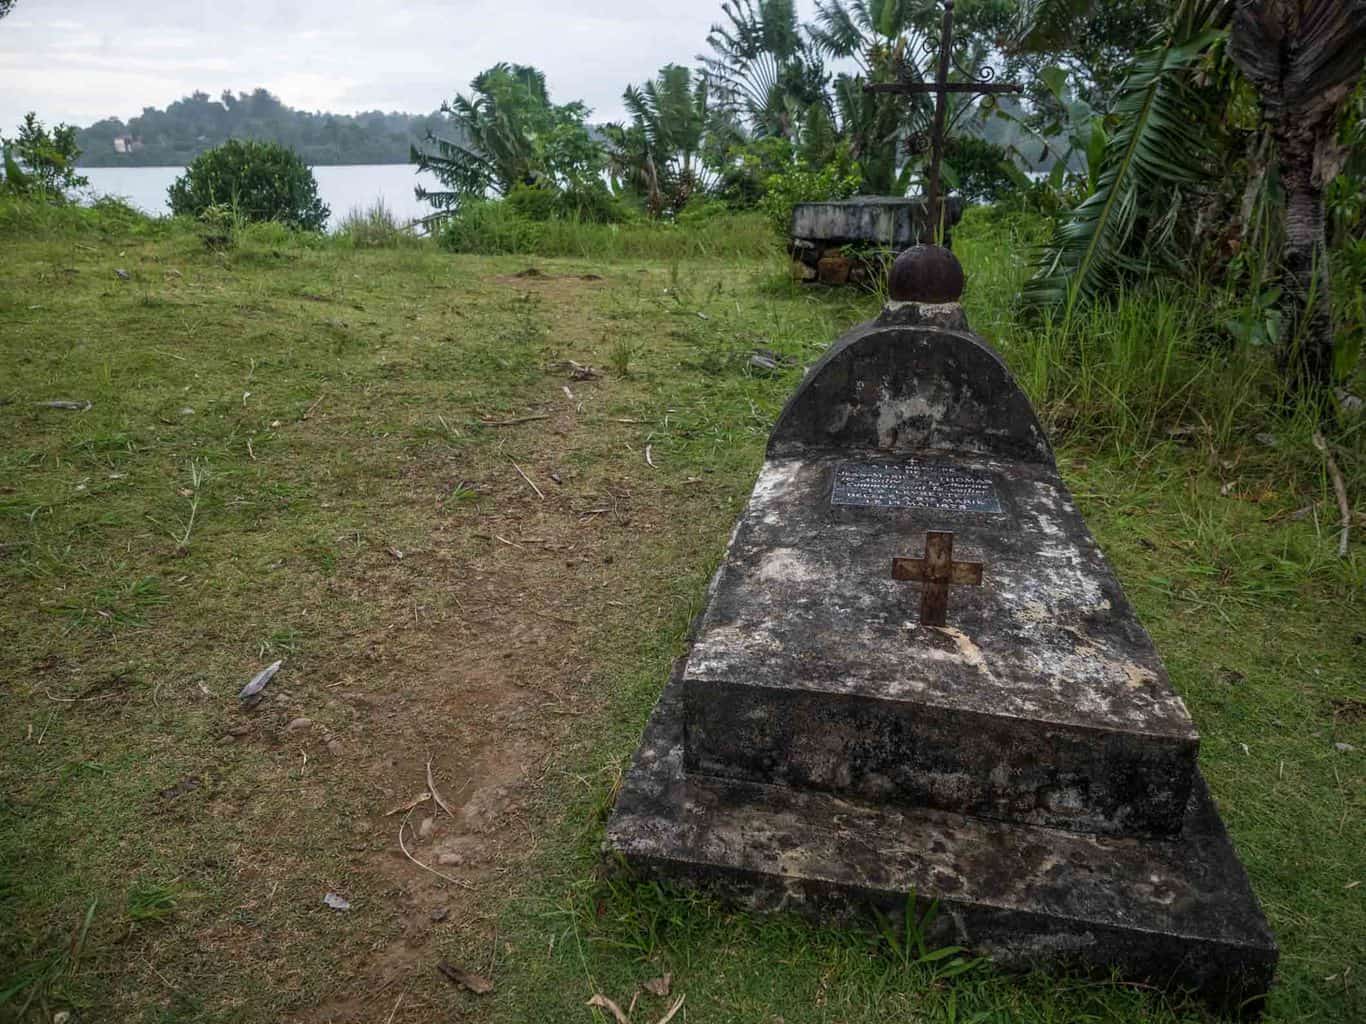 Pirate grave in Madagascar